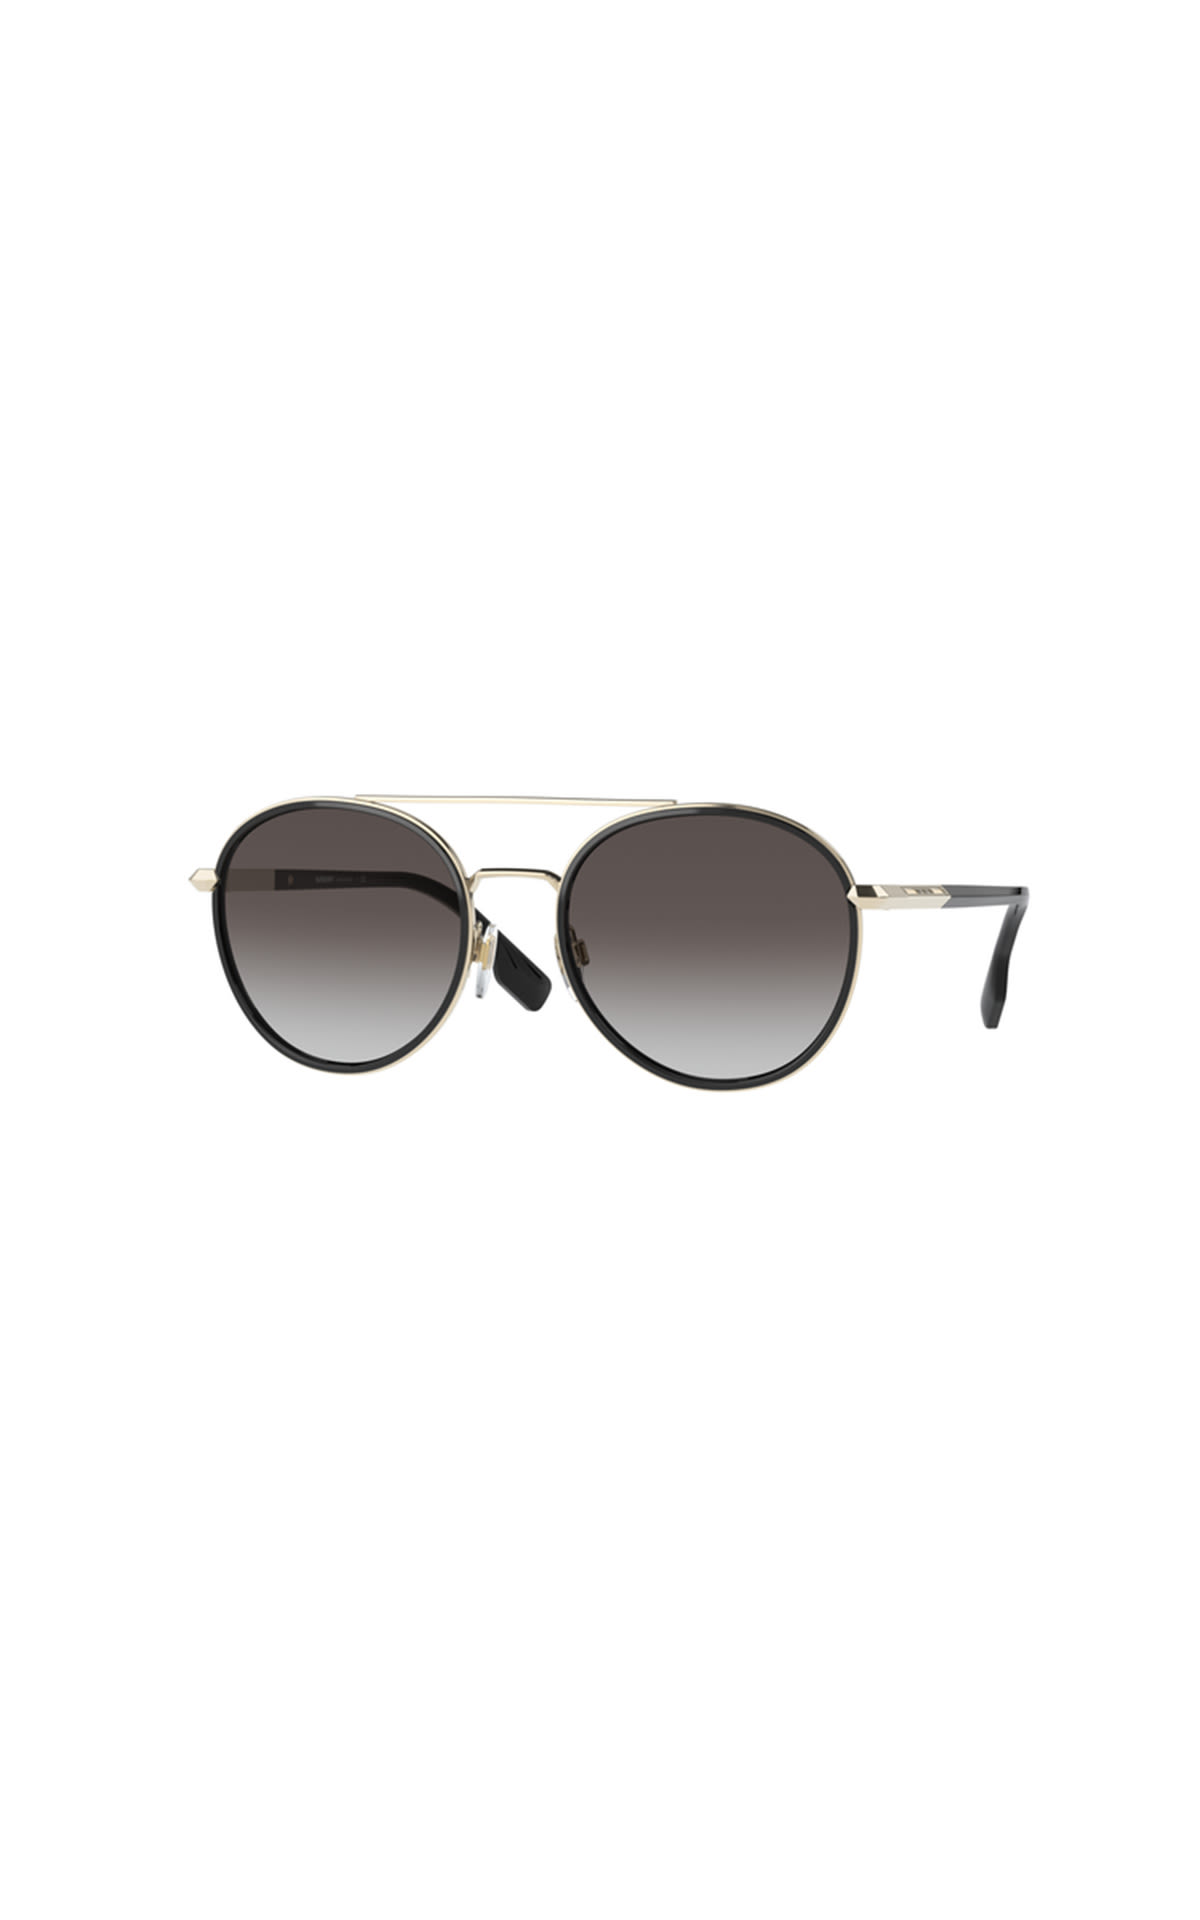 Round black sunglasses for women Sunglass Hut